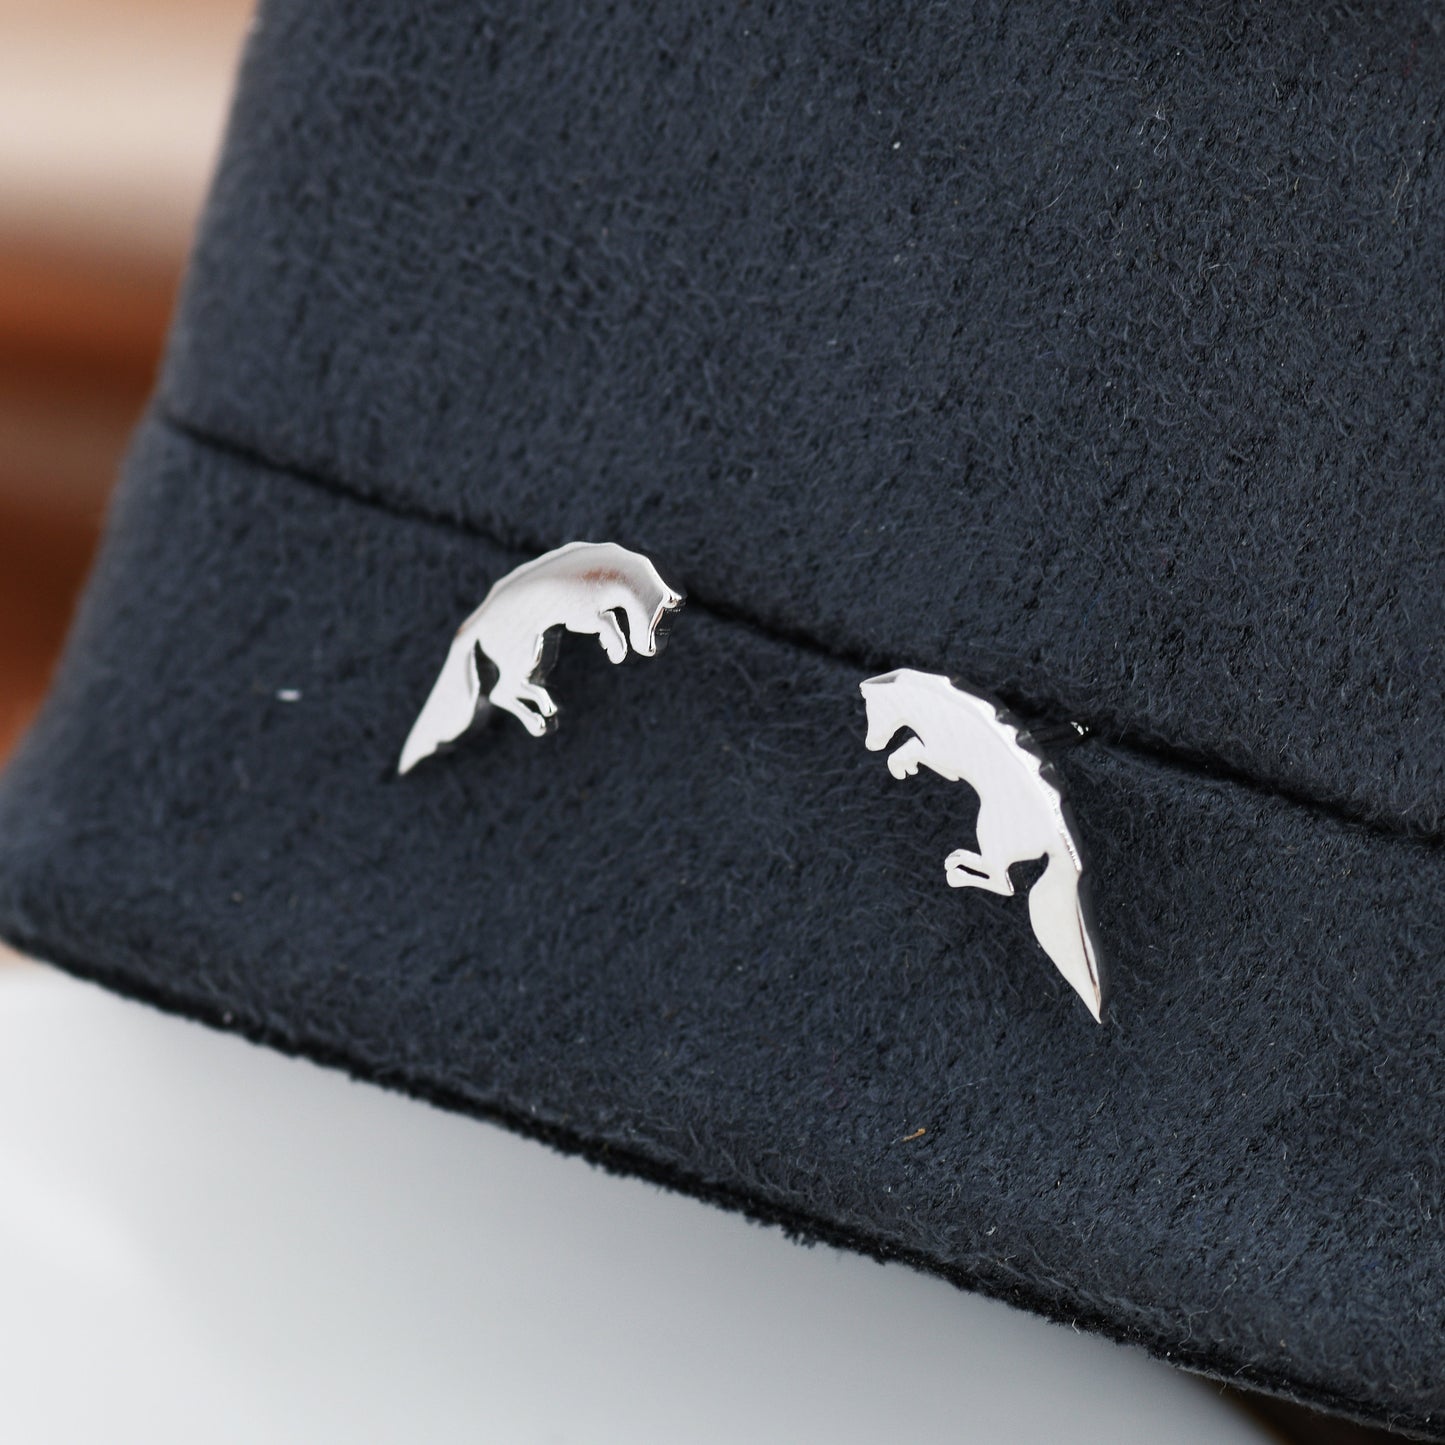 Jumping Fox Stud Earrings in Sterling Silver, Pouncing Fox Earrings,  Nature Inspired Animal Earrings